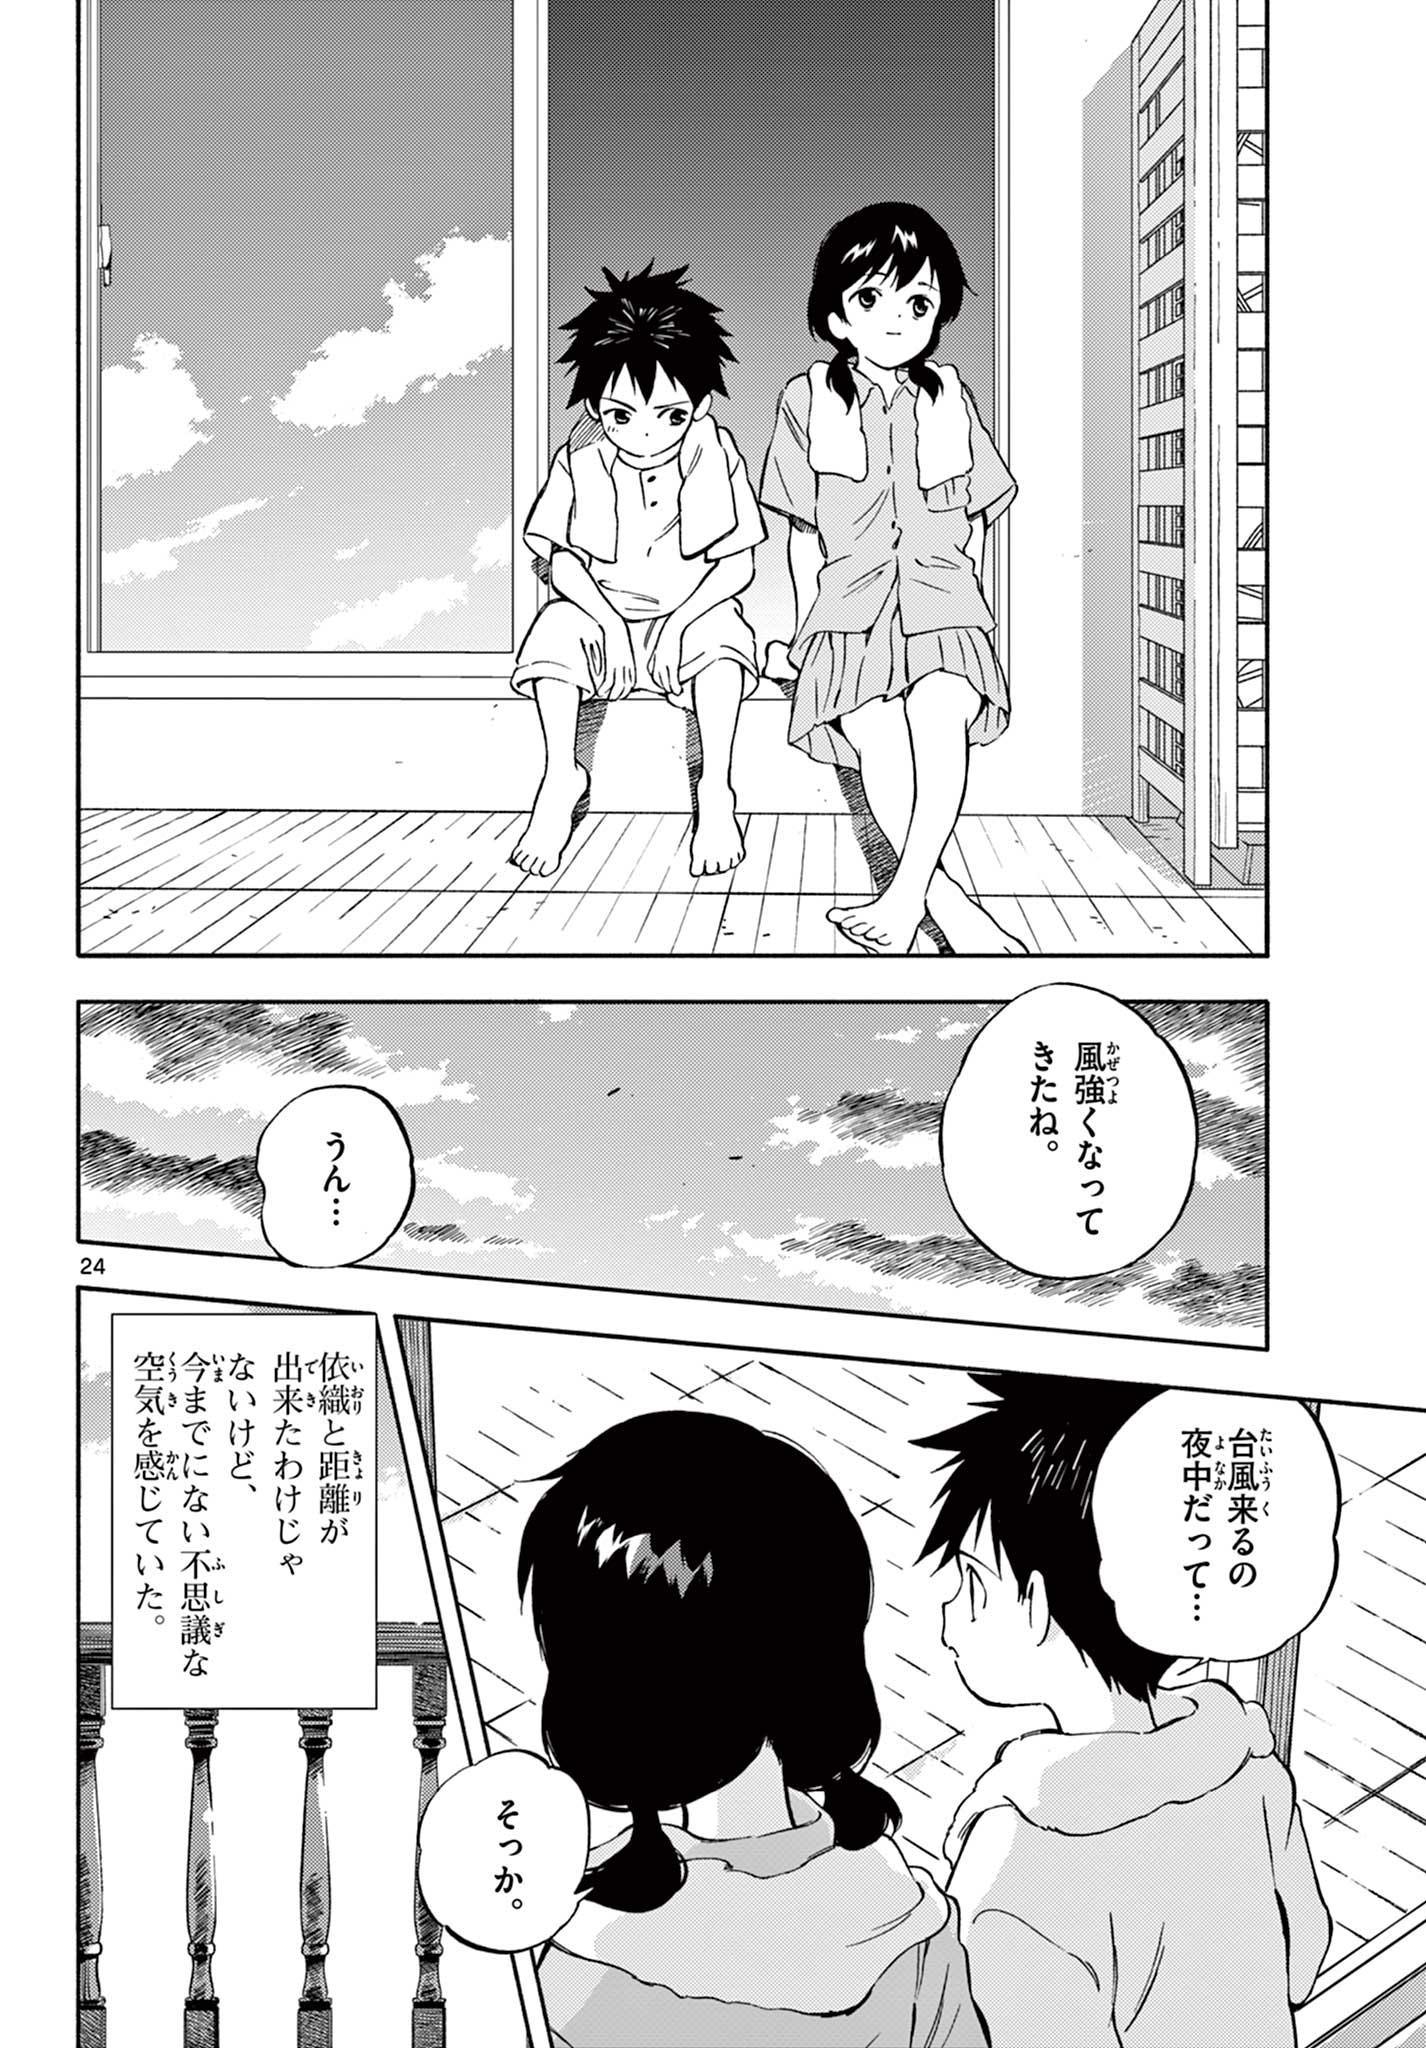 Nami no Shijima no Horizont - Chapter 12.2 - Page 10